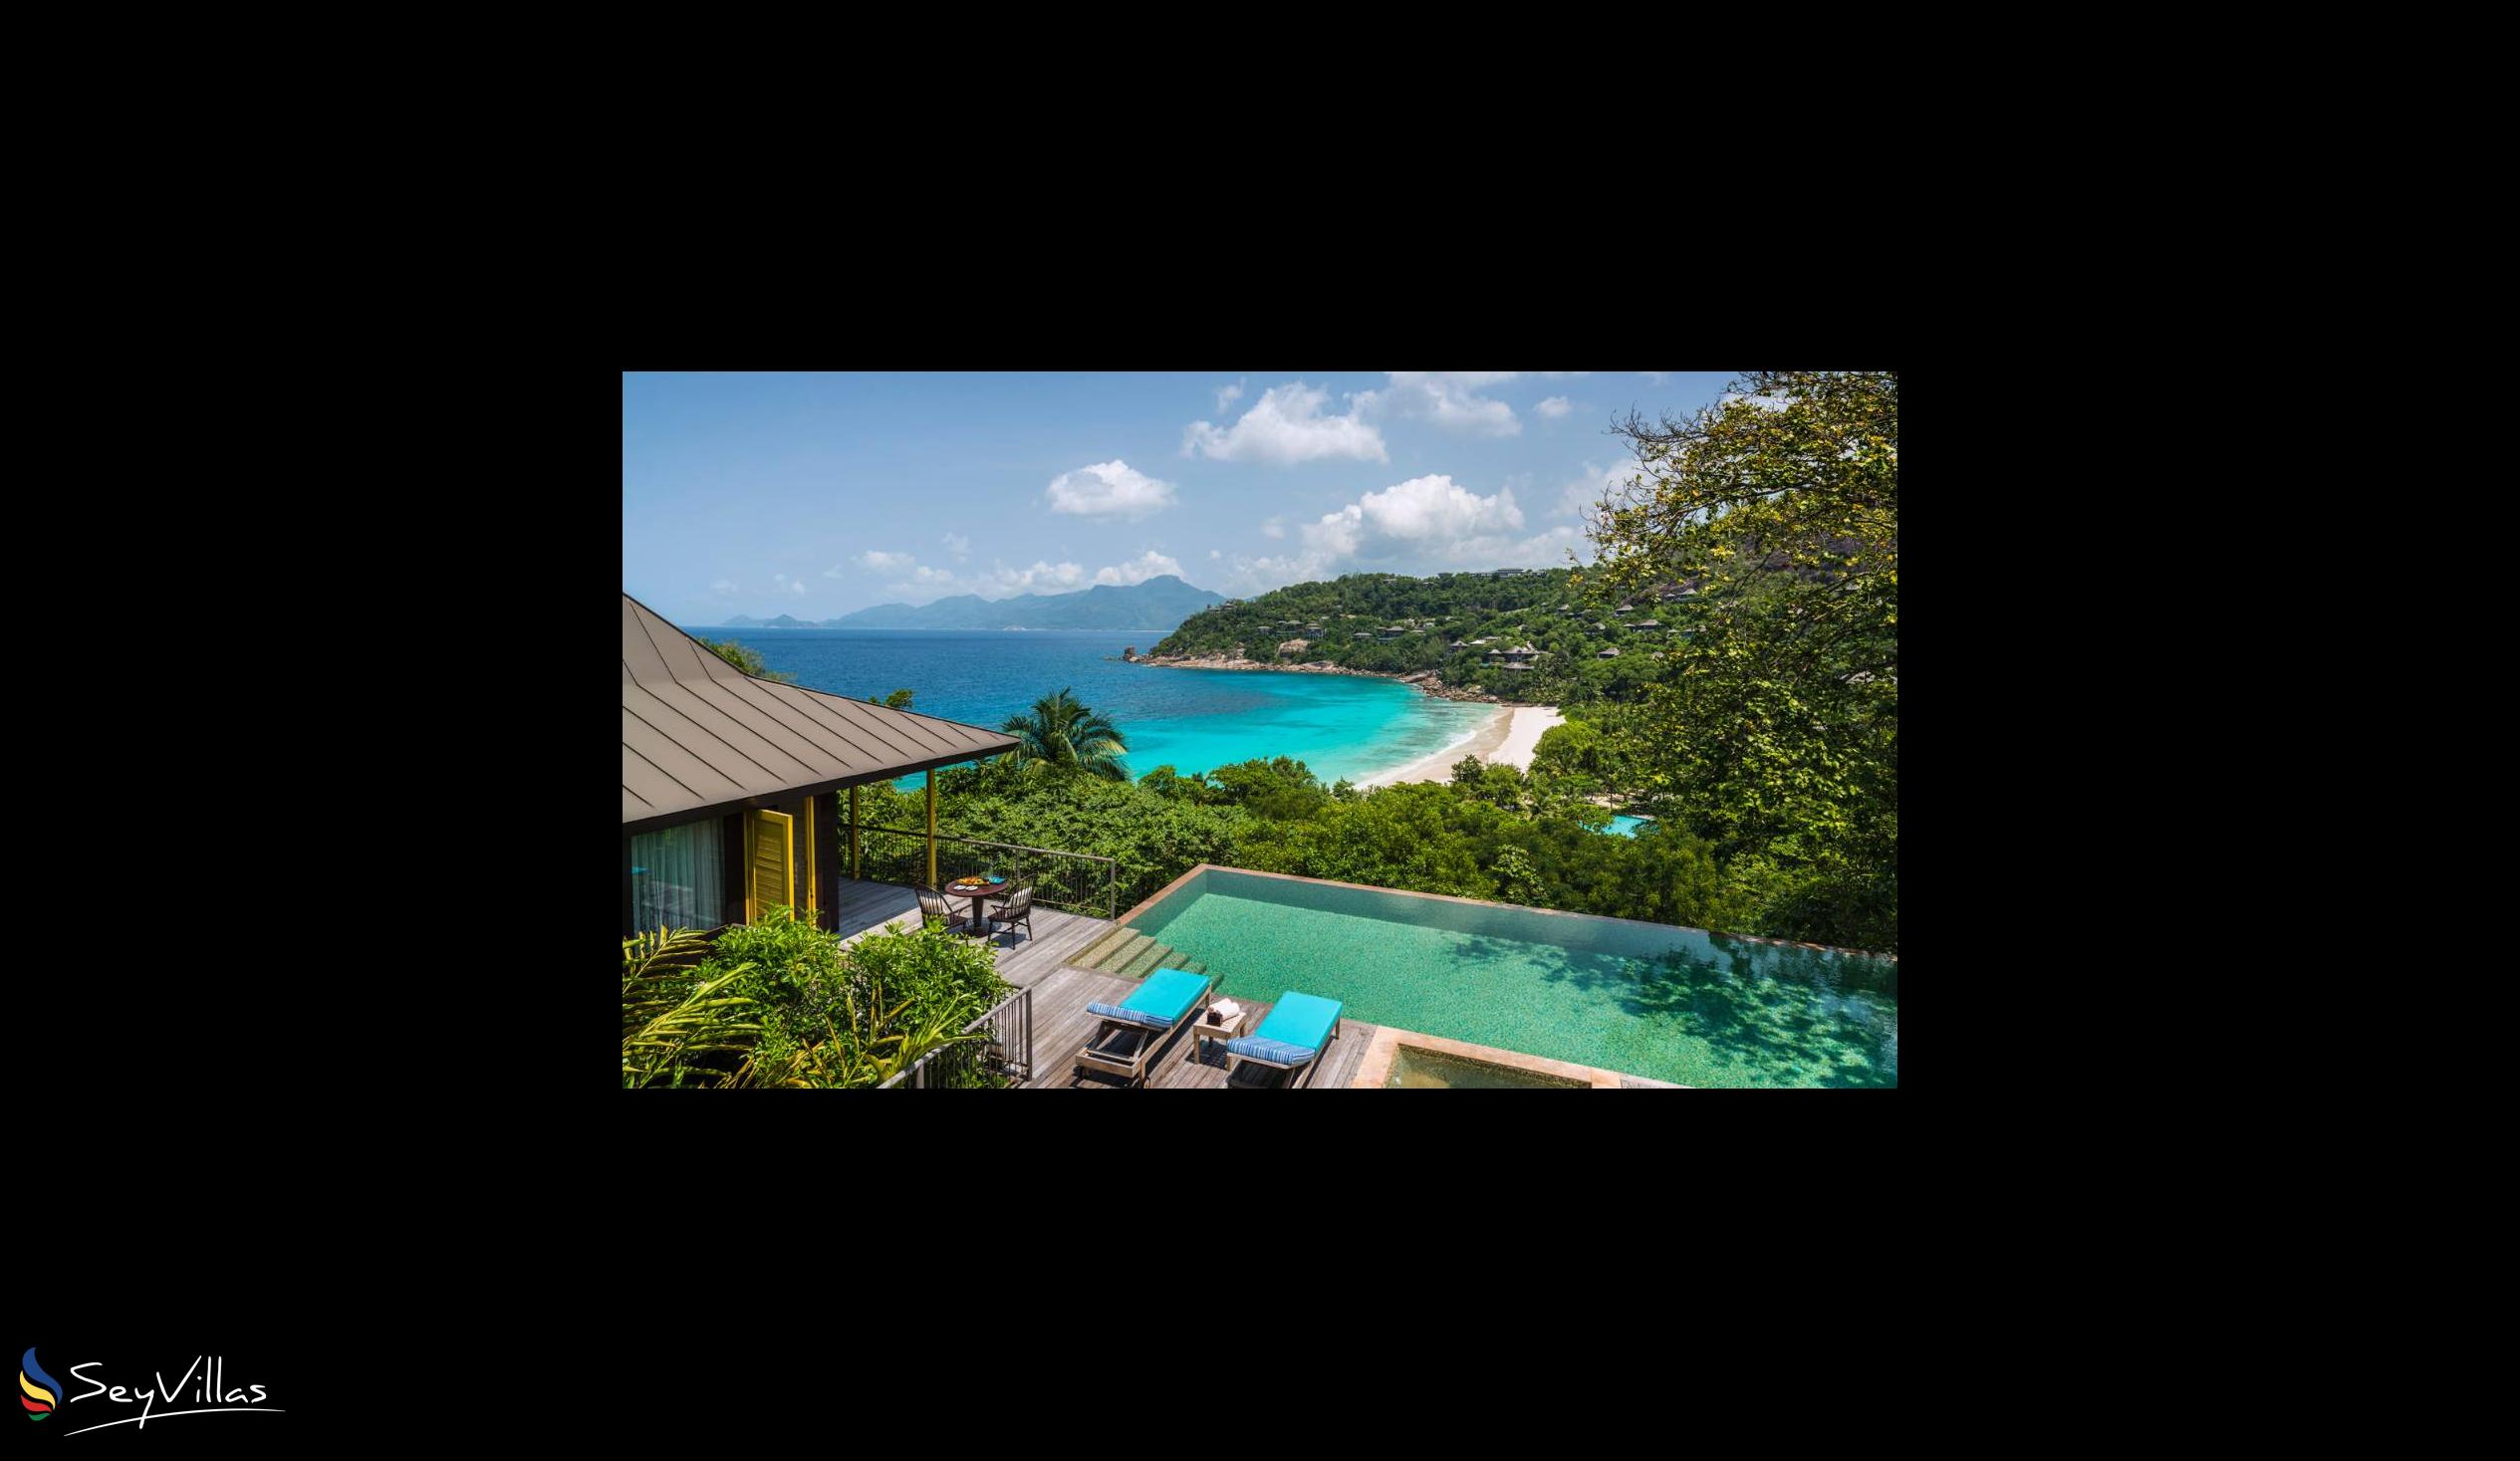 Photo 1: Four Seasons Resort - Outdoor area - Mahé (Seychelles)